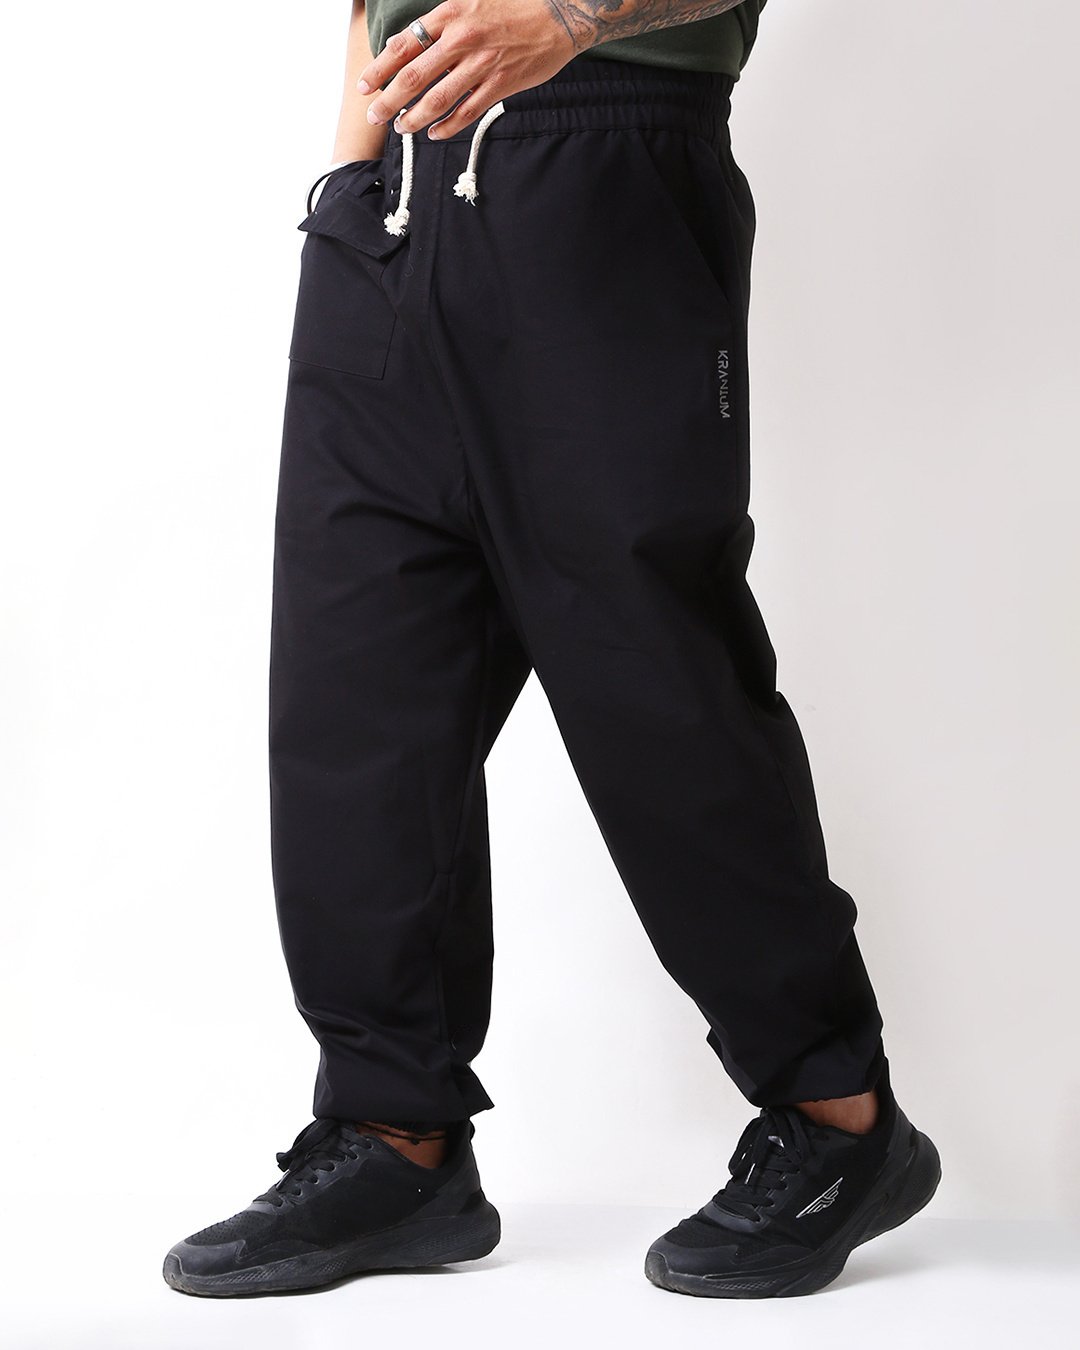 Buy Men's Deep Black Loose Comfort Fit Joggers Online at Bewakoof